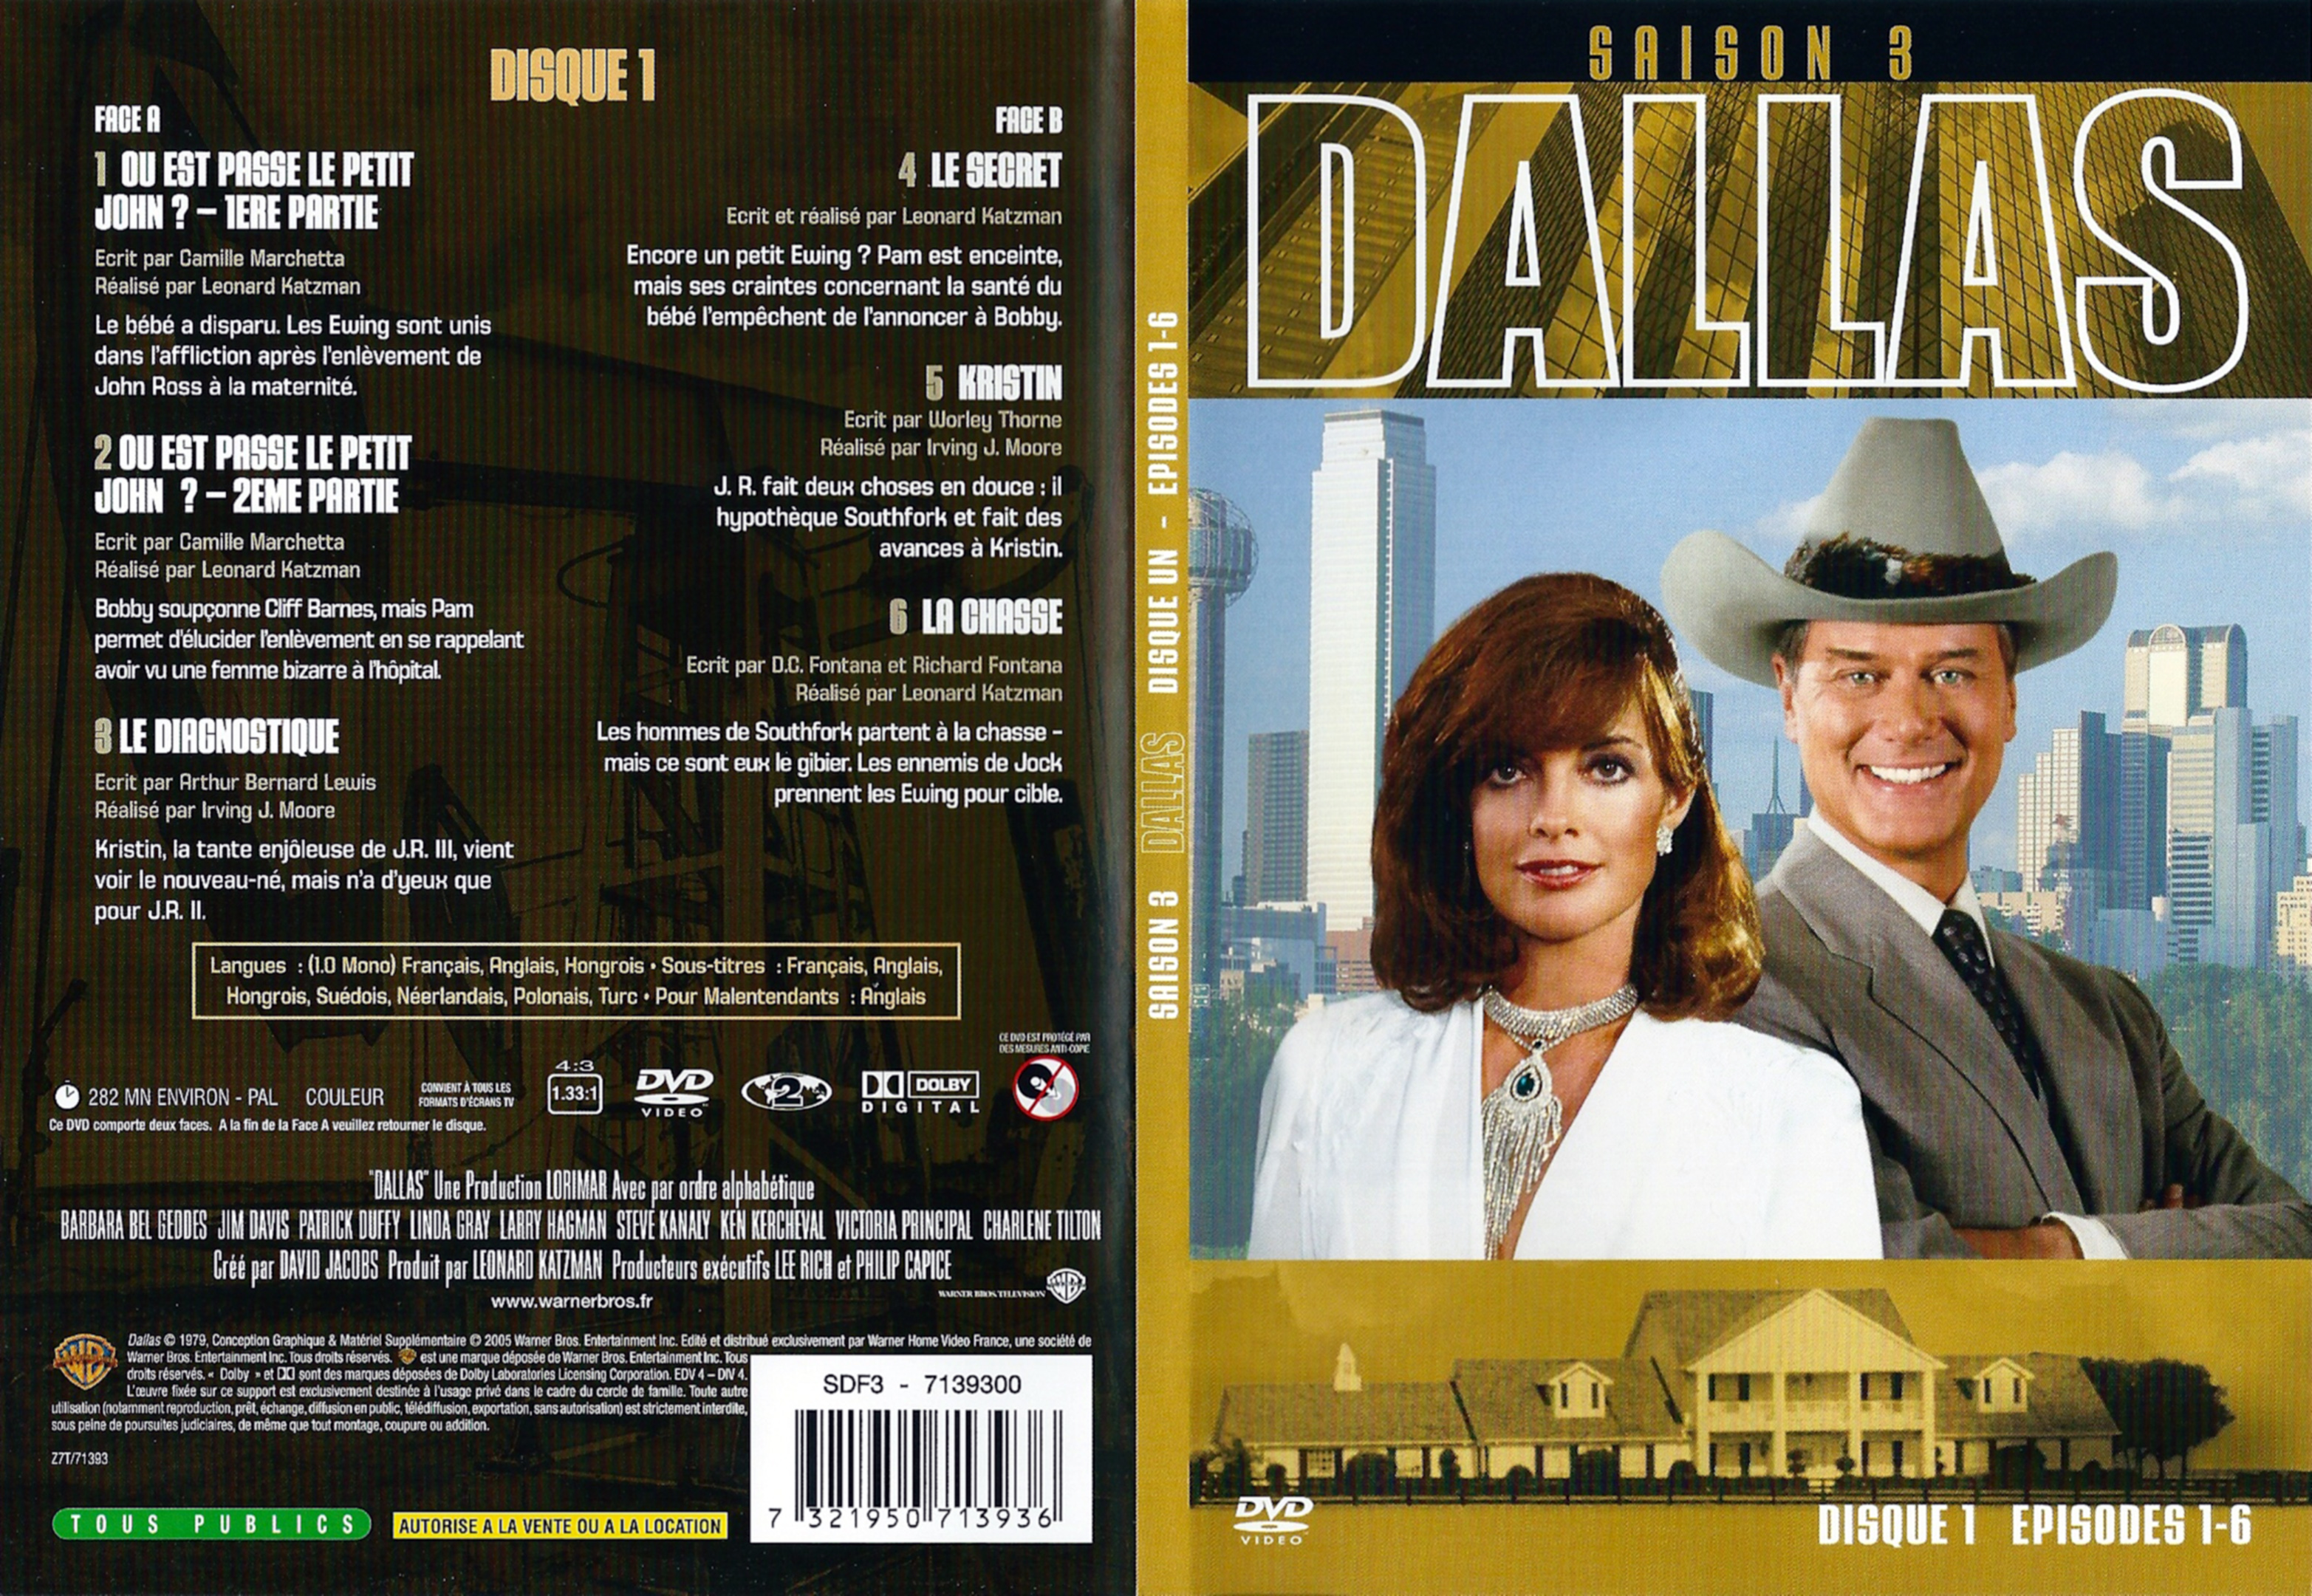 Jaquette DVD Dallas Saison 3 DVD 1